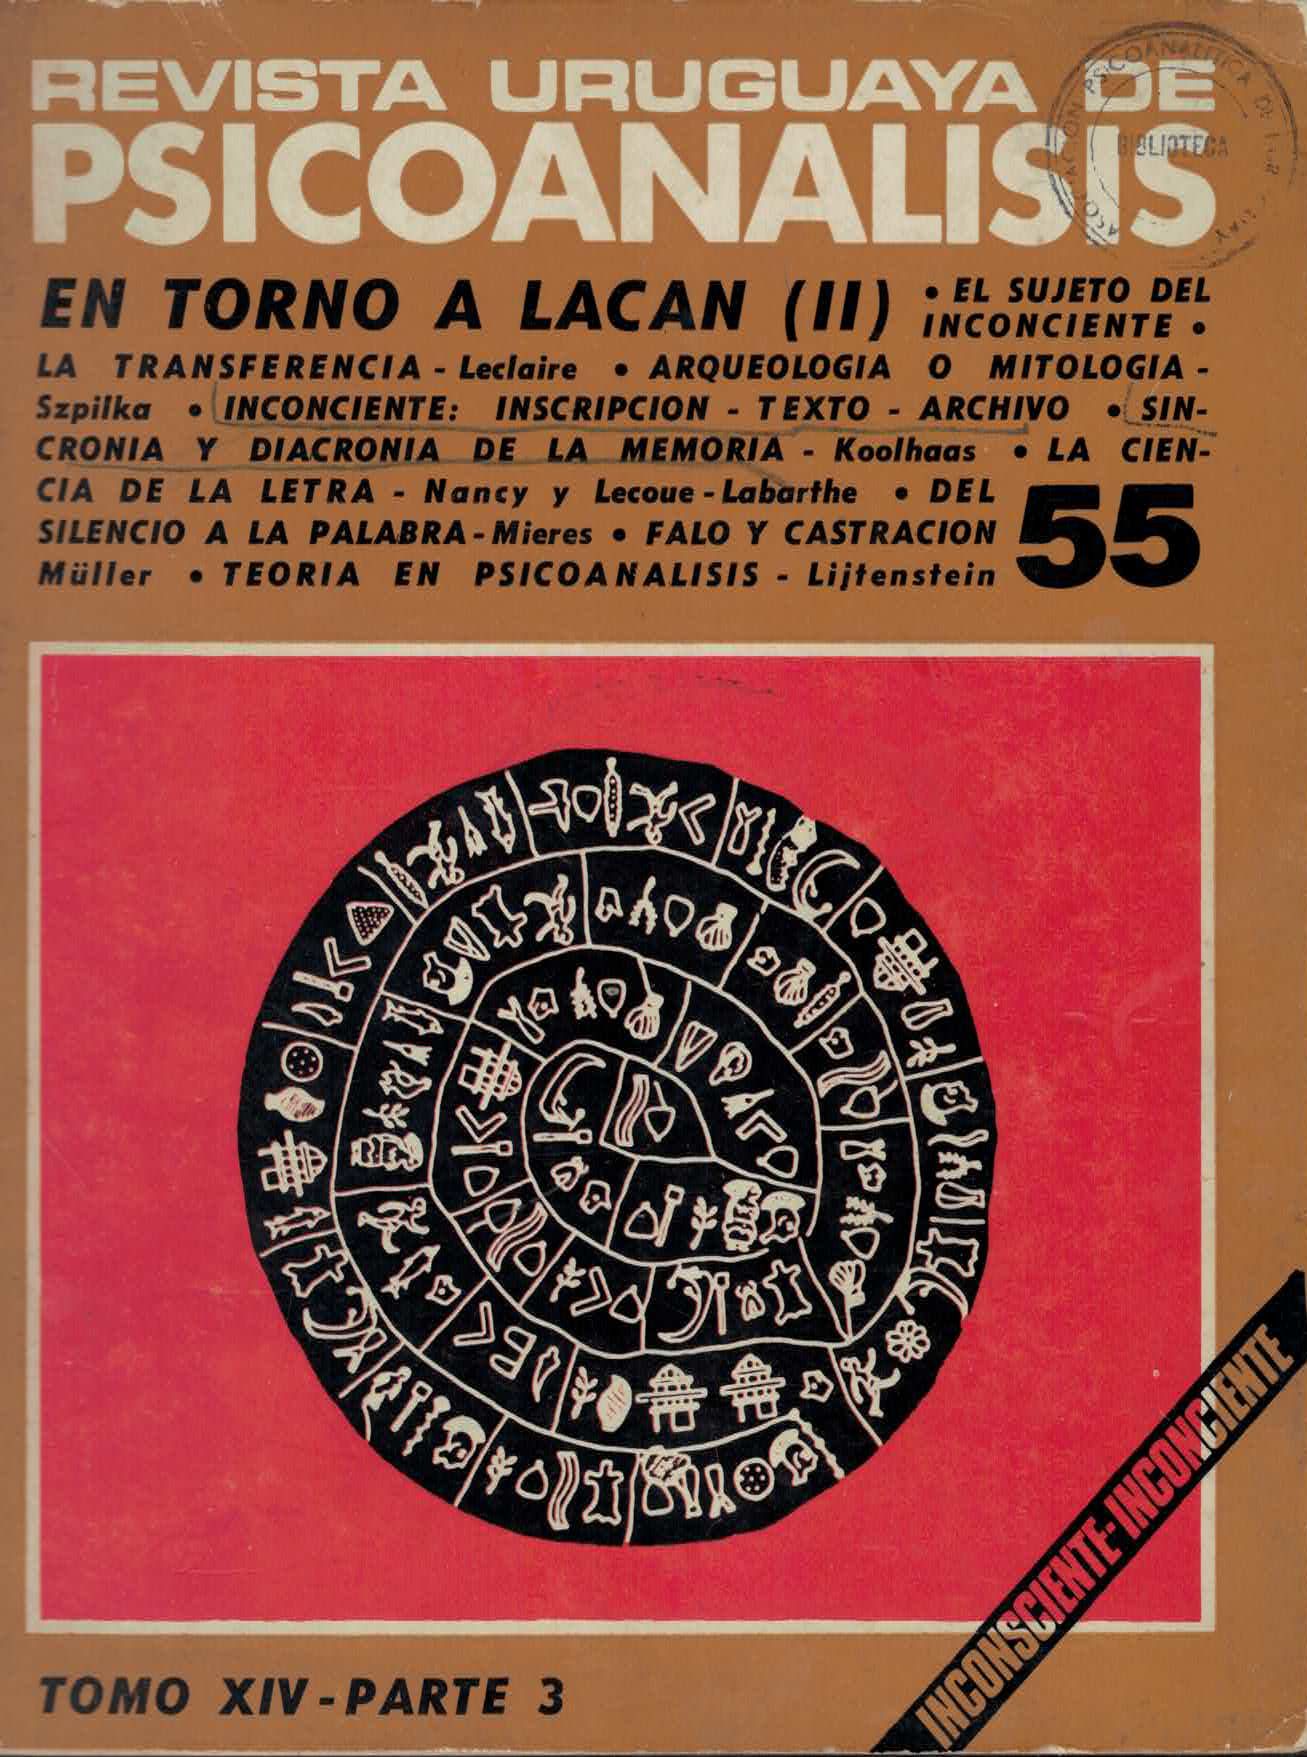 					Ver Núm. 55 (1976): Revista Uruguaya de Psicoanálisis
				